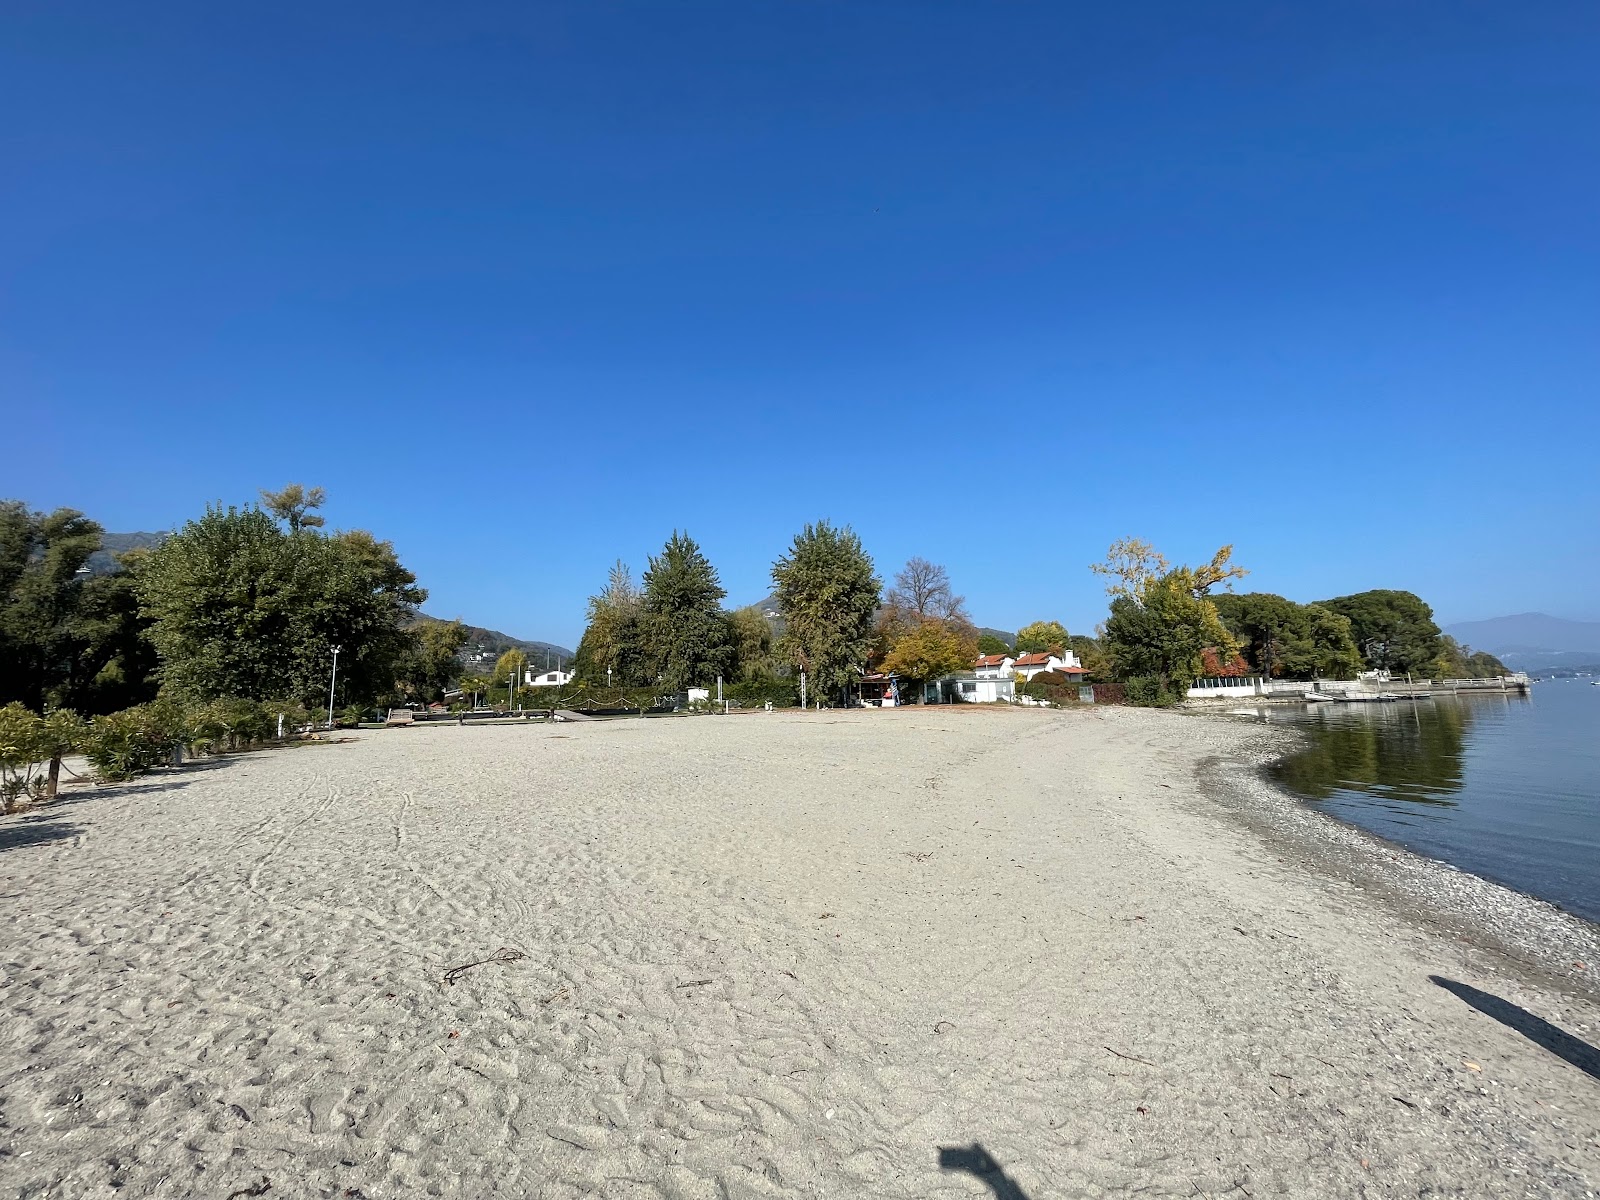 Foto de Spiaggia dell' Erno com alto nível de limpeza